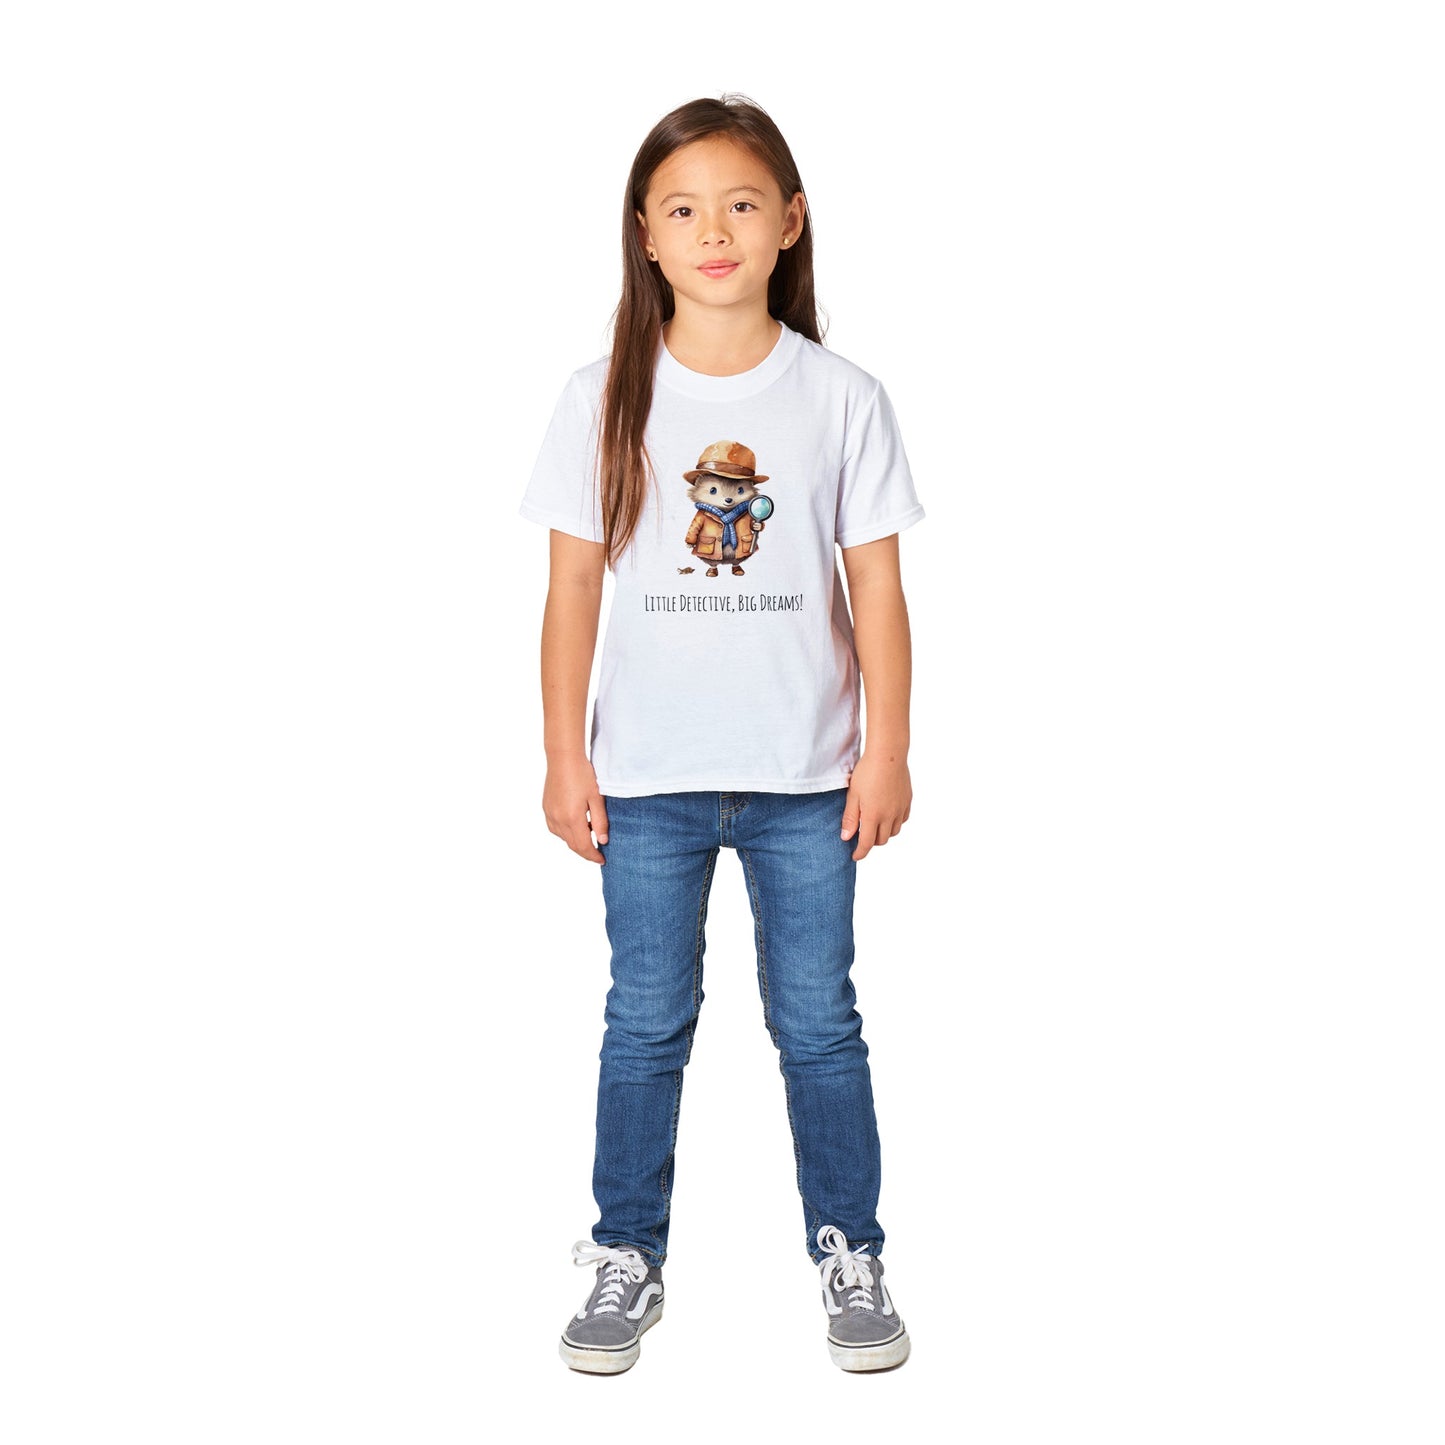 Classic Kids Crewneck T-shirt - Little Detective, Big Dreams!